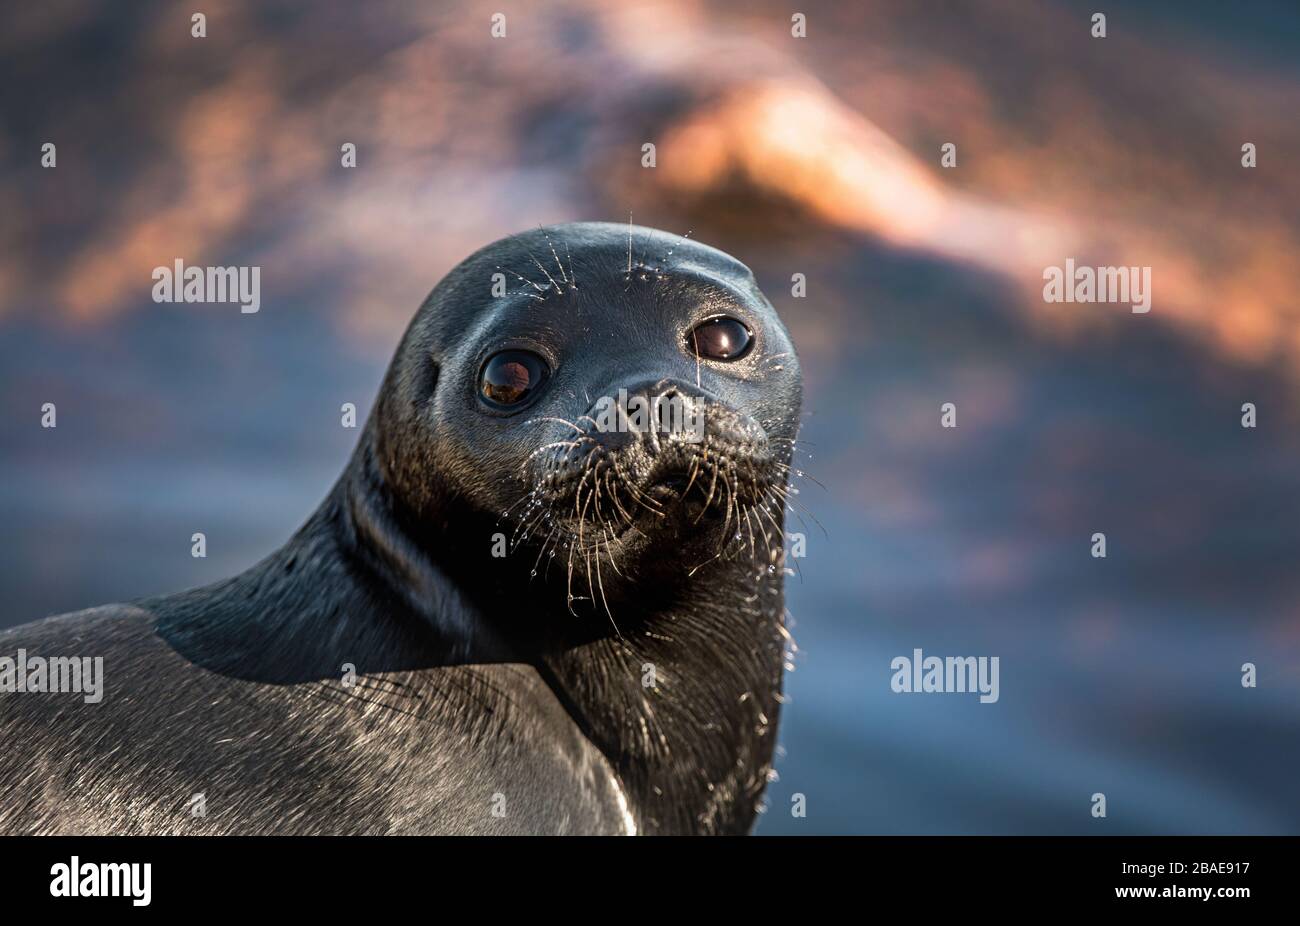 The Ladoga ringed seal. Close up portrait. Scientific name: Pusa hispida ladogensis. The Ladoga seal in a natural habitat. Ladoga Lake. Russia Stock Photo